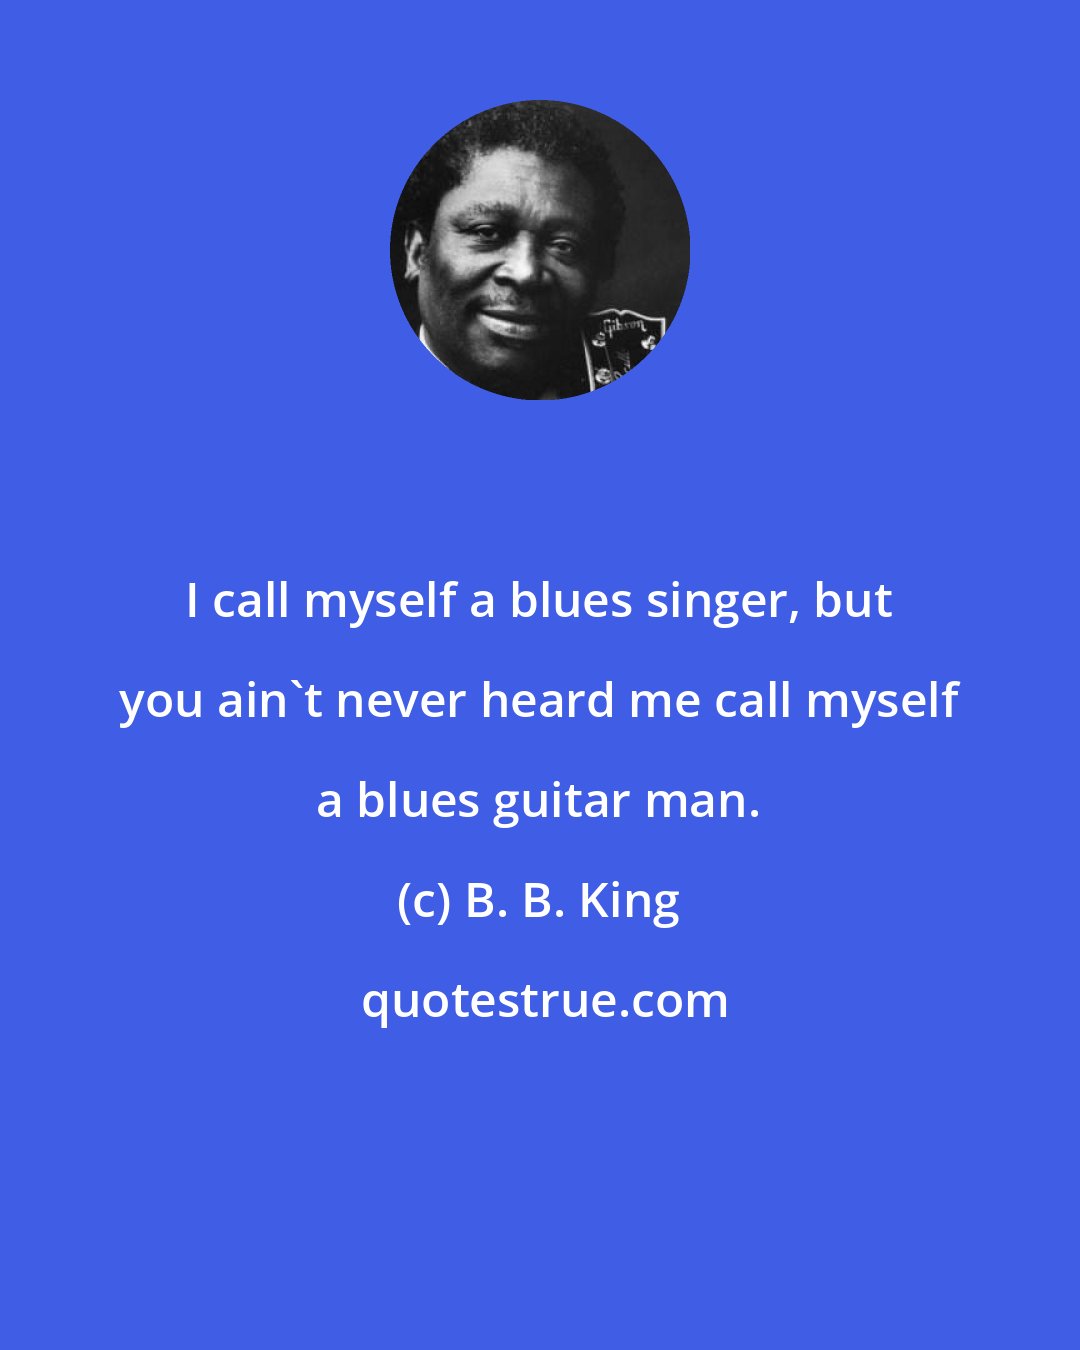 B. B. King: I call myself a blues singer, but you ain't never heard me call myself a blues guitar man.